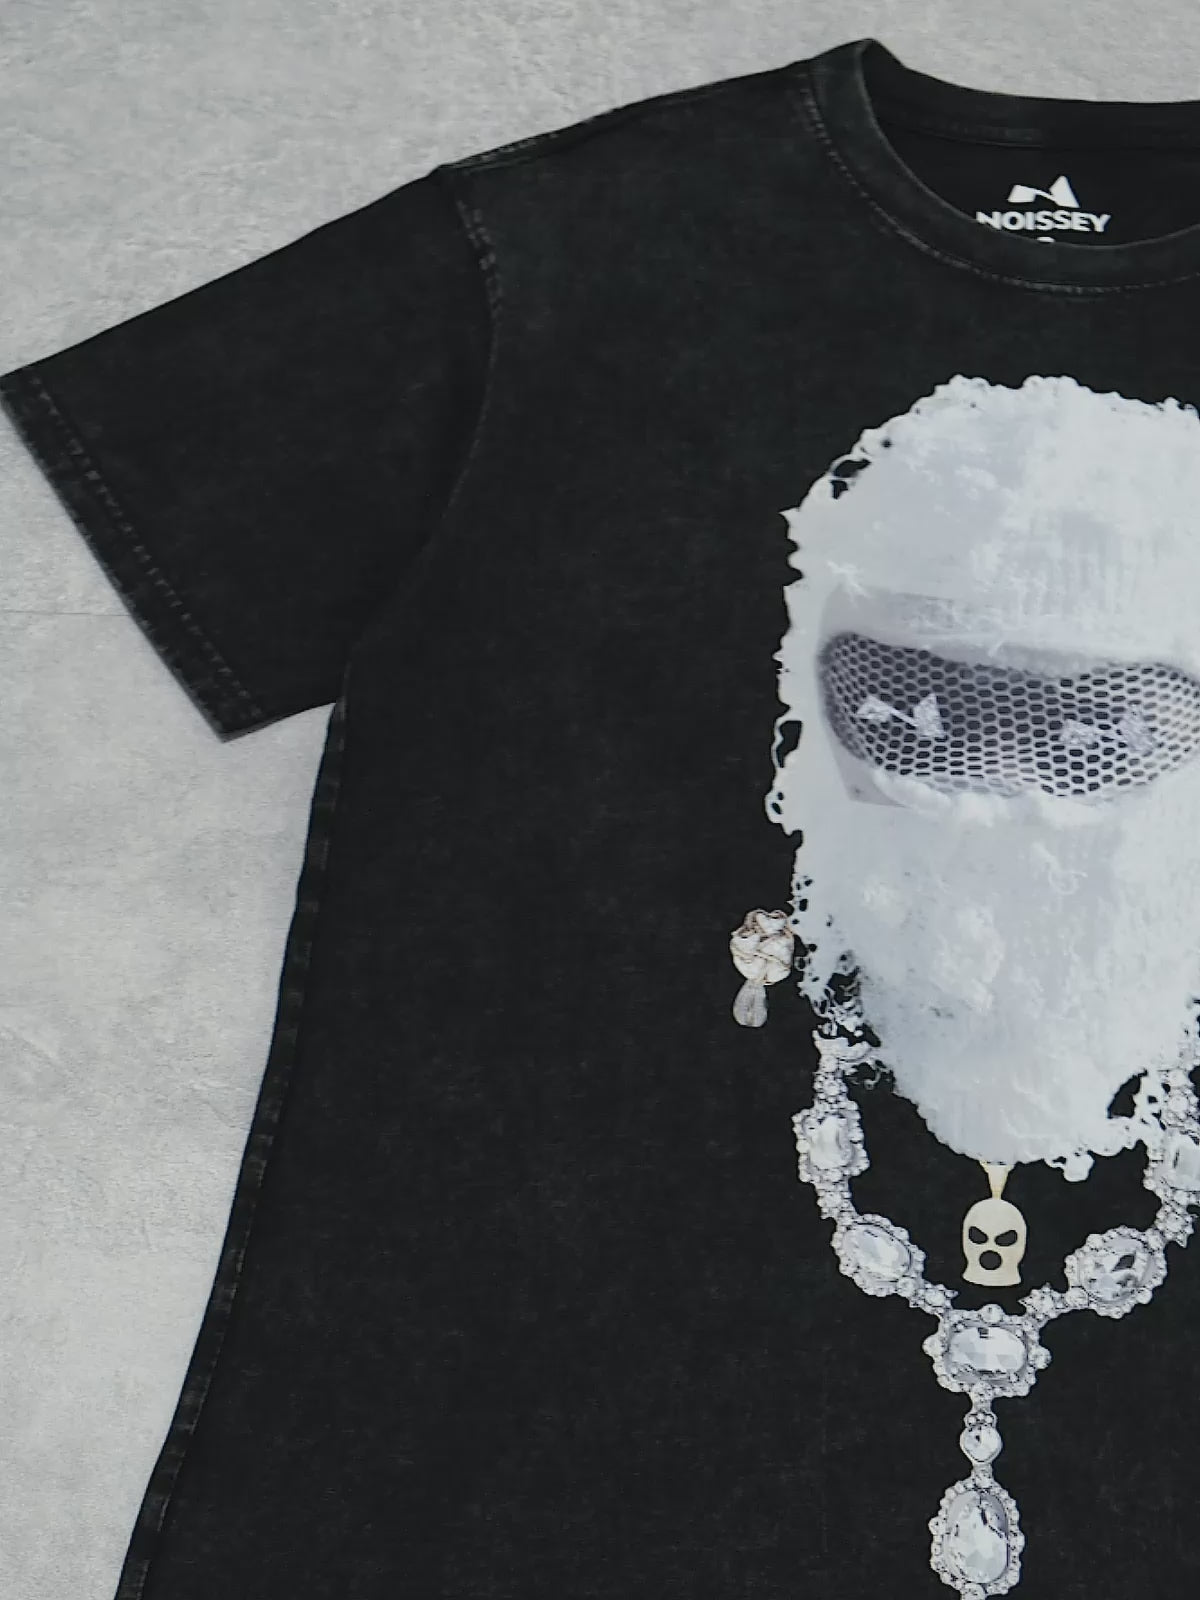 BOUNCE BACK© Masked Diamond Headgear Printed T-shirt